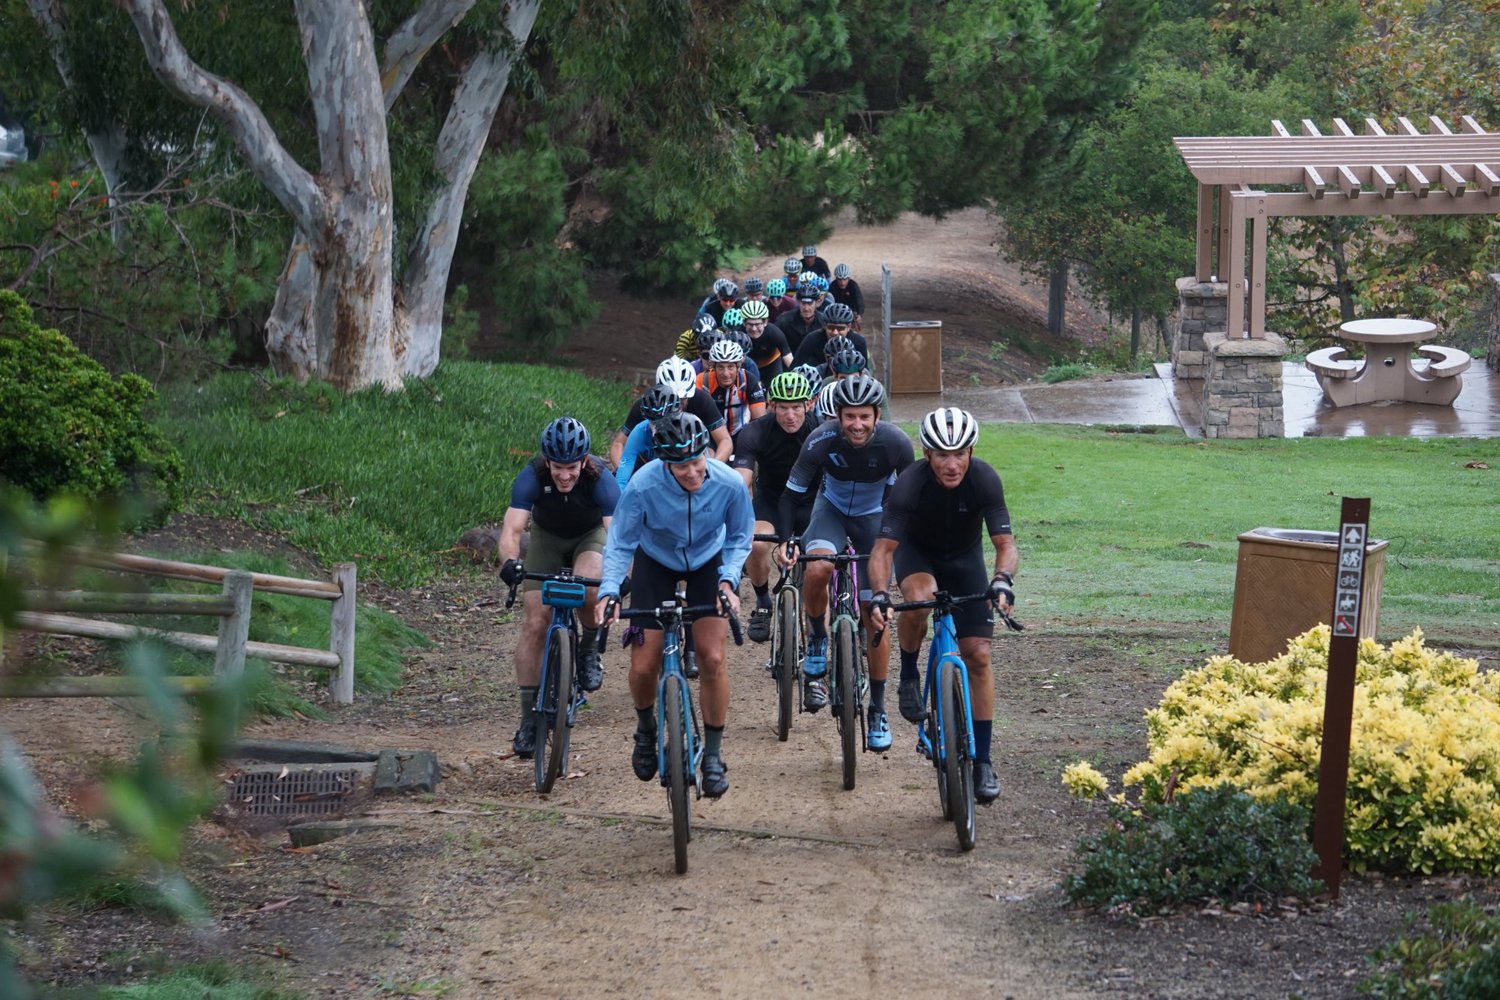 San Diego biking club Gravelsoke's monthly gravel rides event